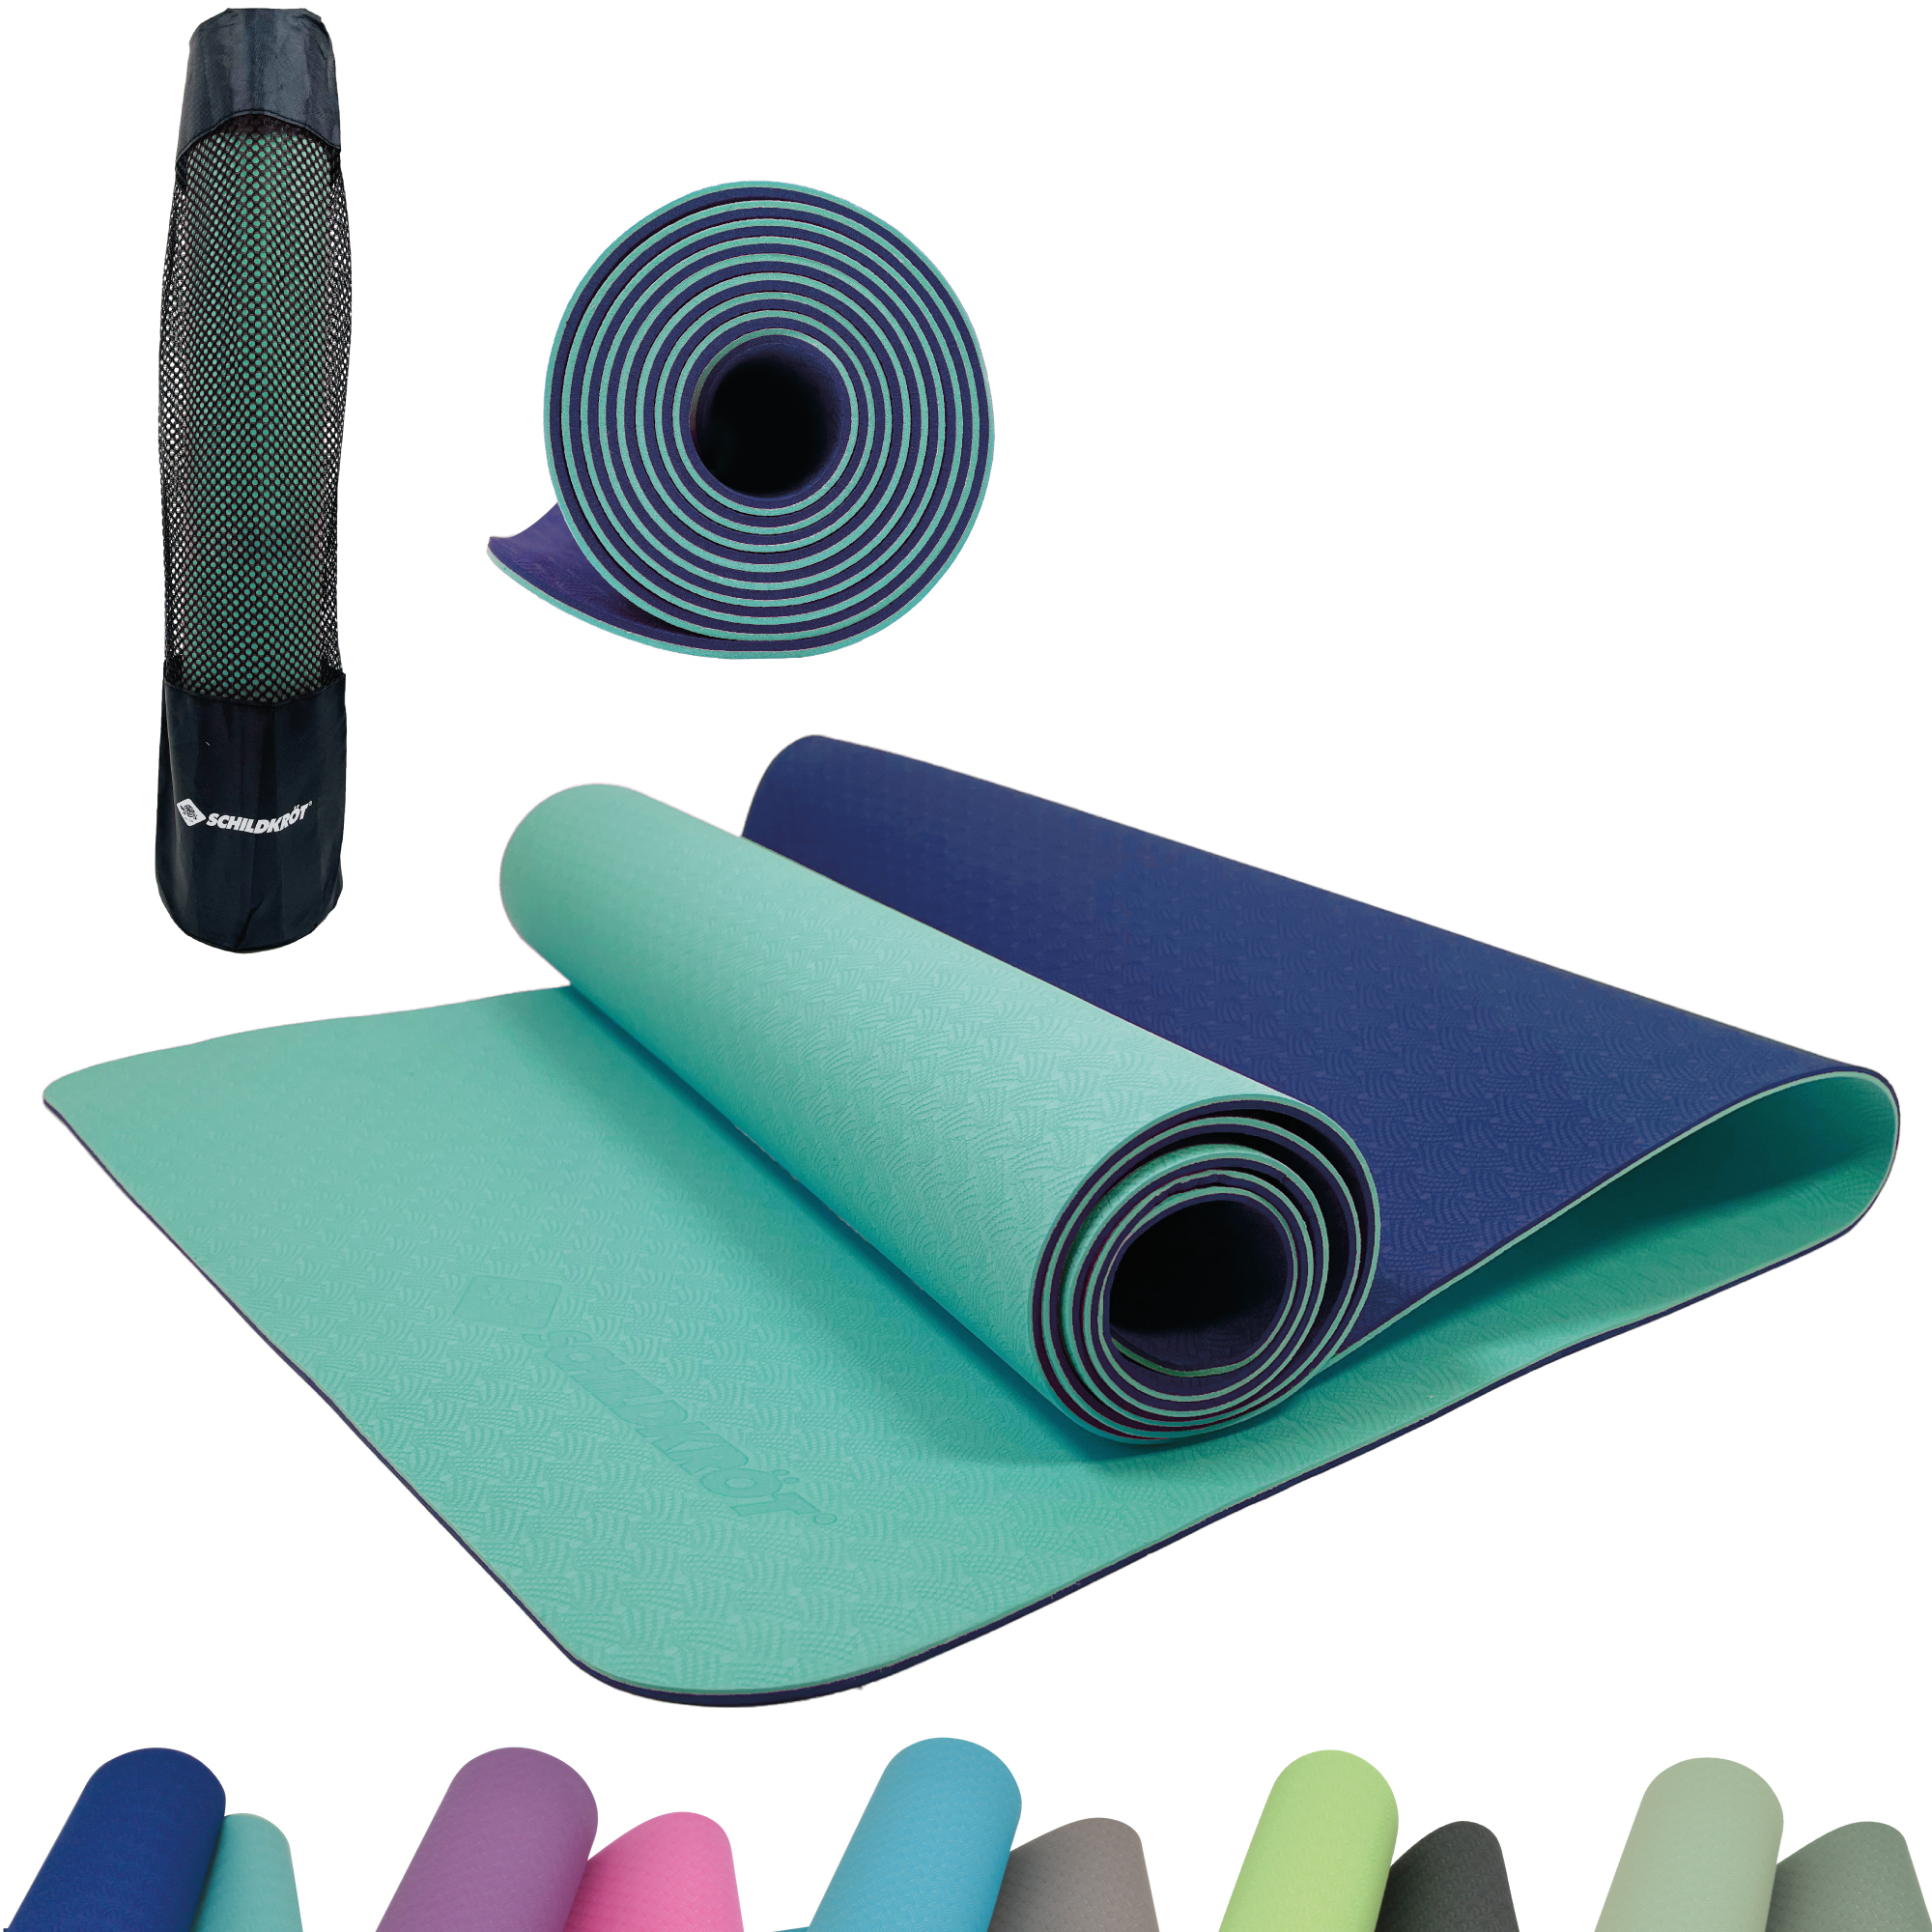 Schildkröt Bicolor Yogamatte, Navy-Mint, 4mm, PVC-frei, im Carrybag Art. 960067